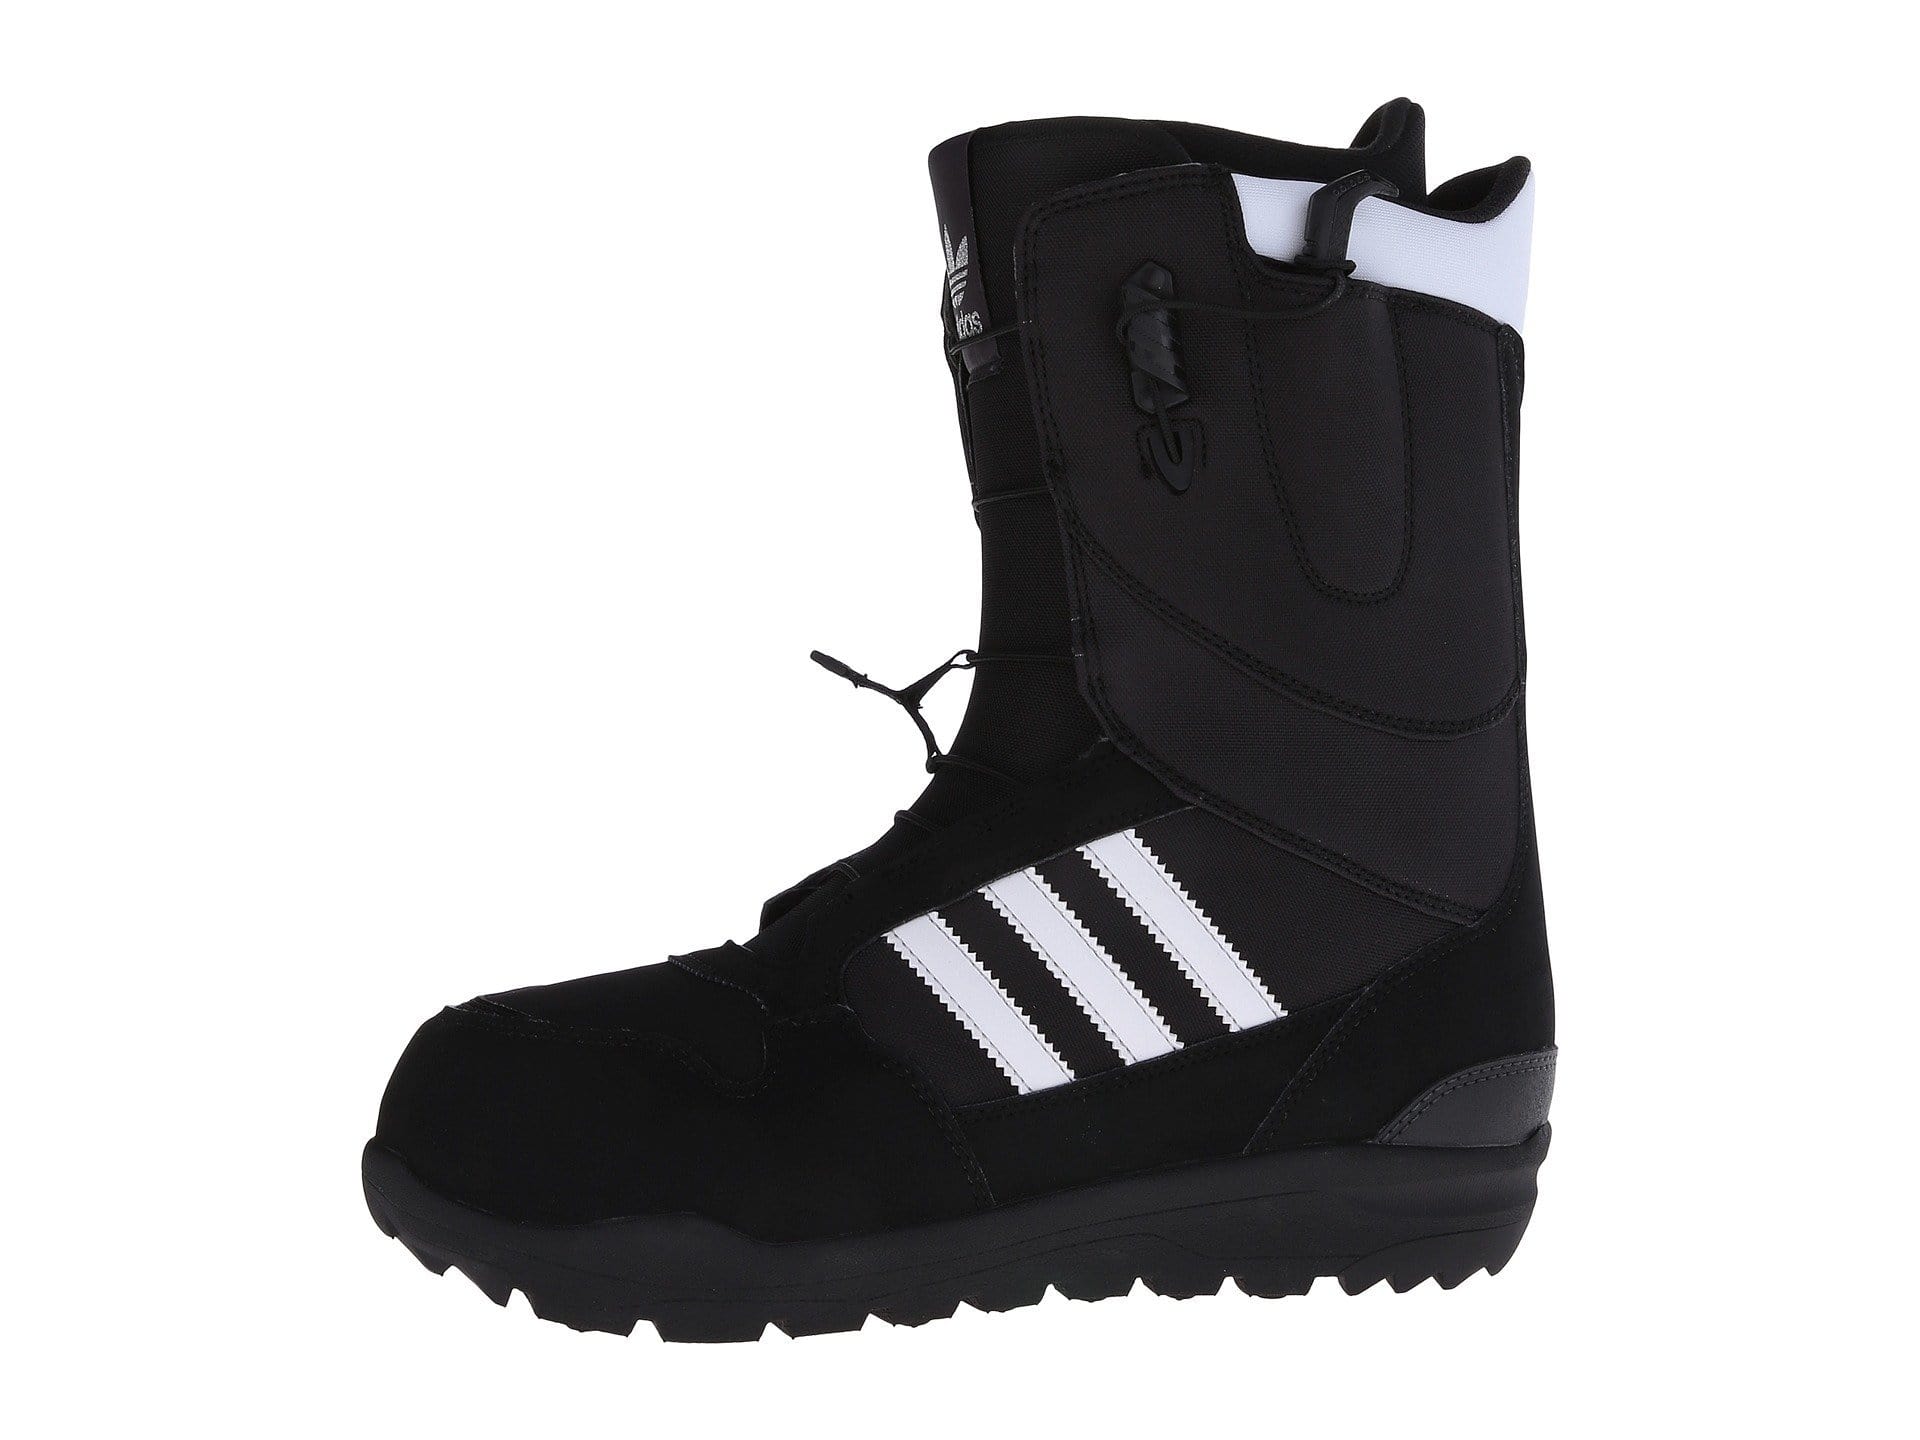 Adidas Snowboarding Men's ZX Core Black/FTWR White/Iron Met Boots – Ultra